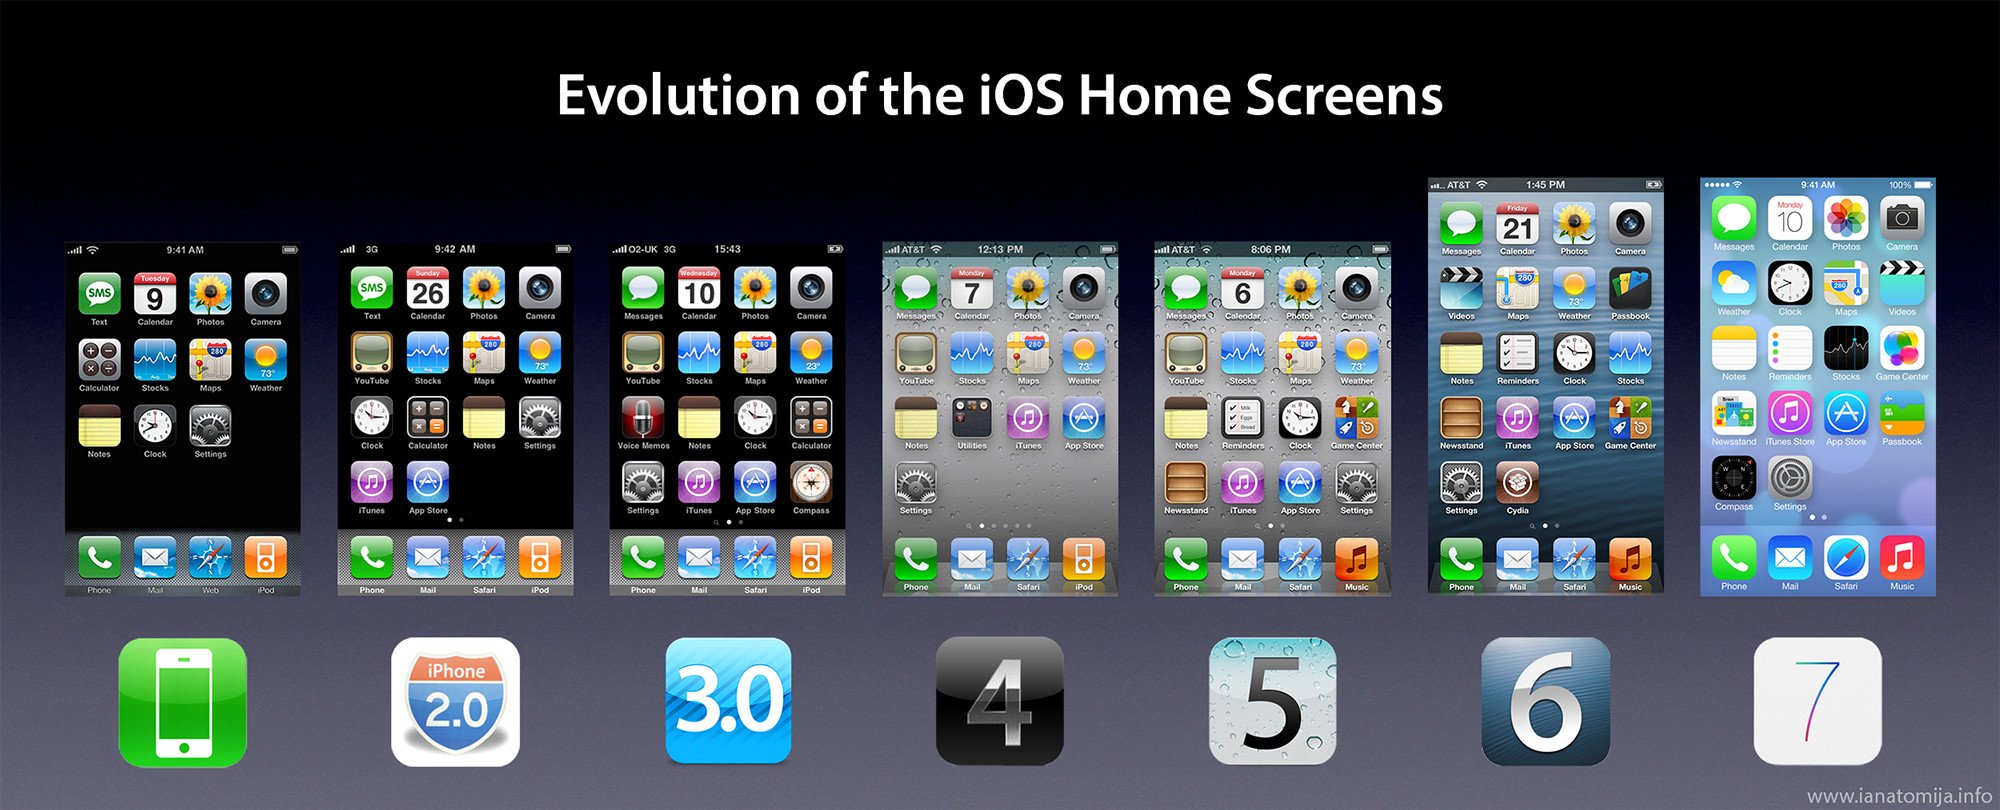 Evolution des iOS Homescreens iPhoneOS 1.0 bis iOS 7 1